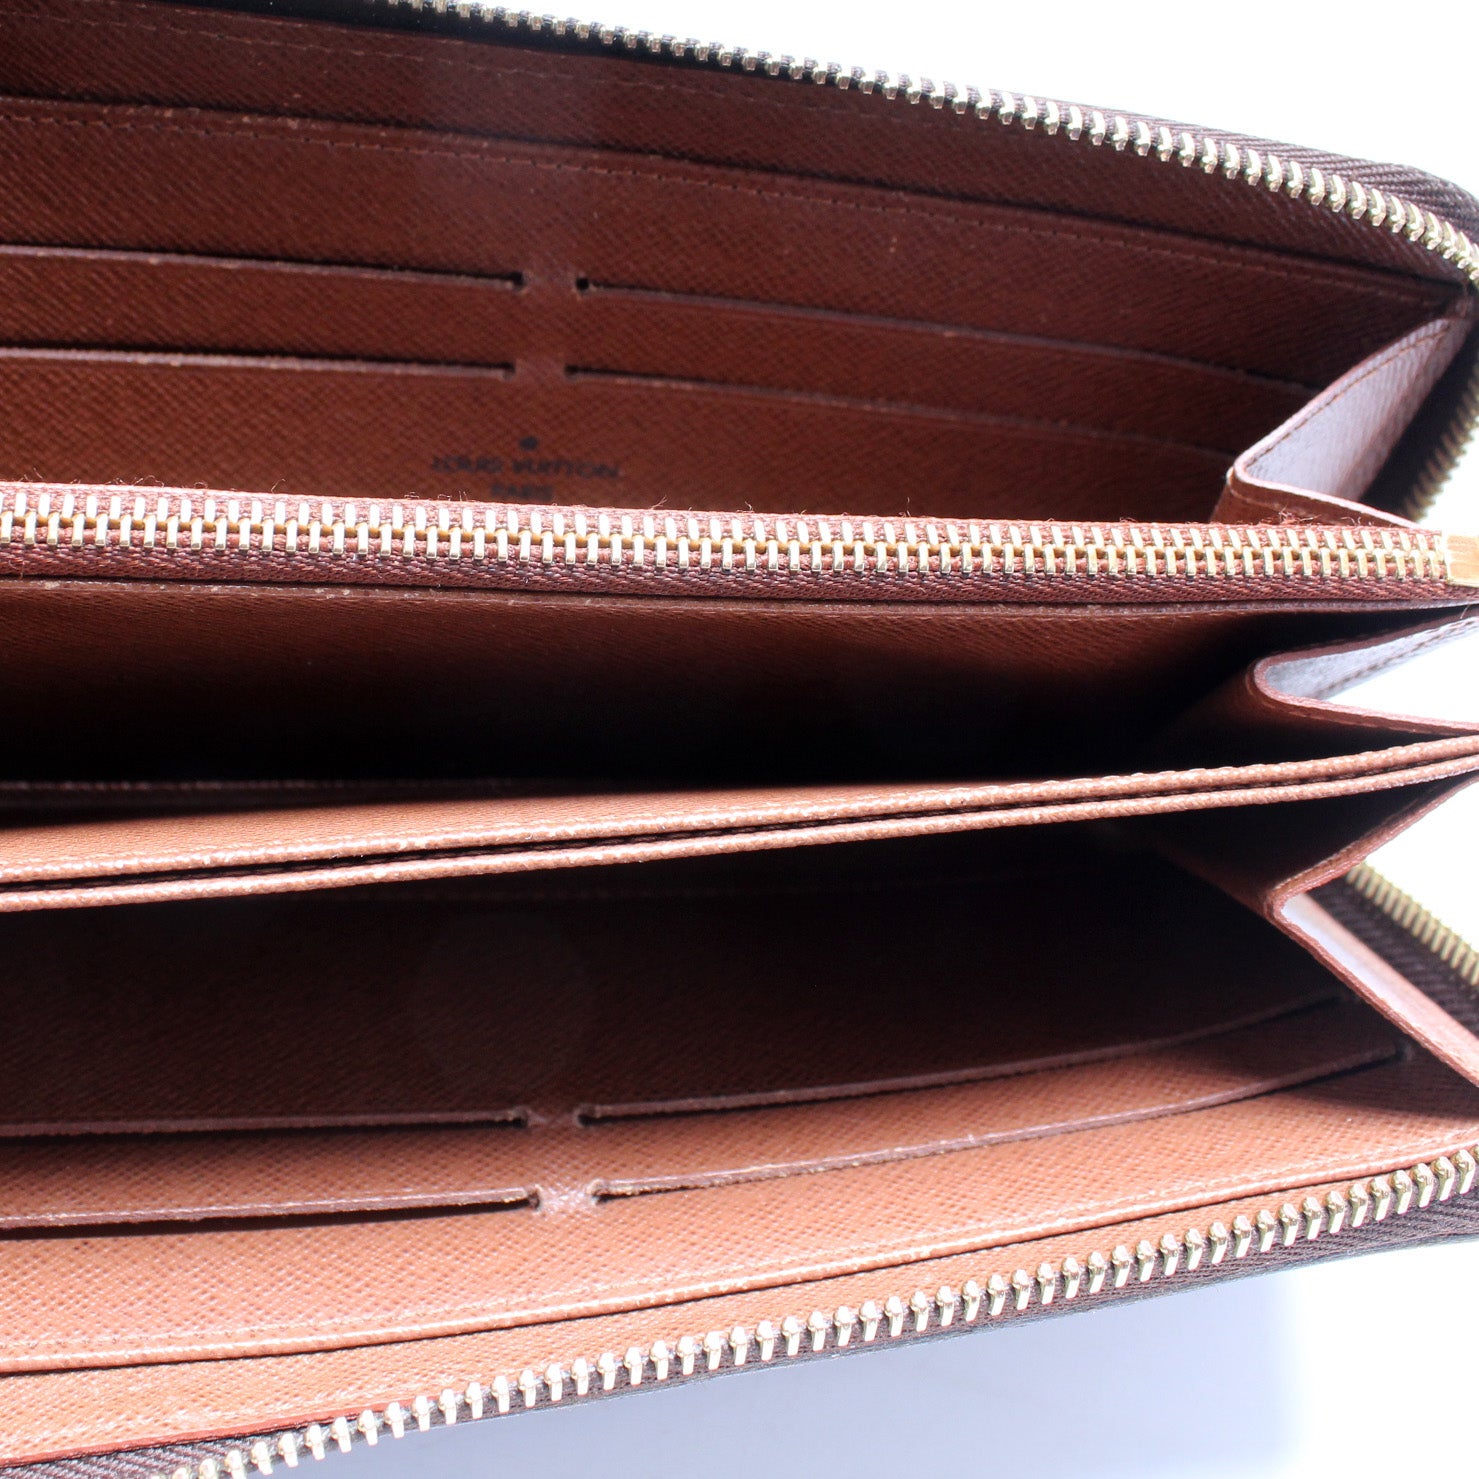 Zippy Wallet Monogram – Keeks Designer Handbags